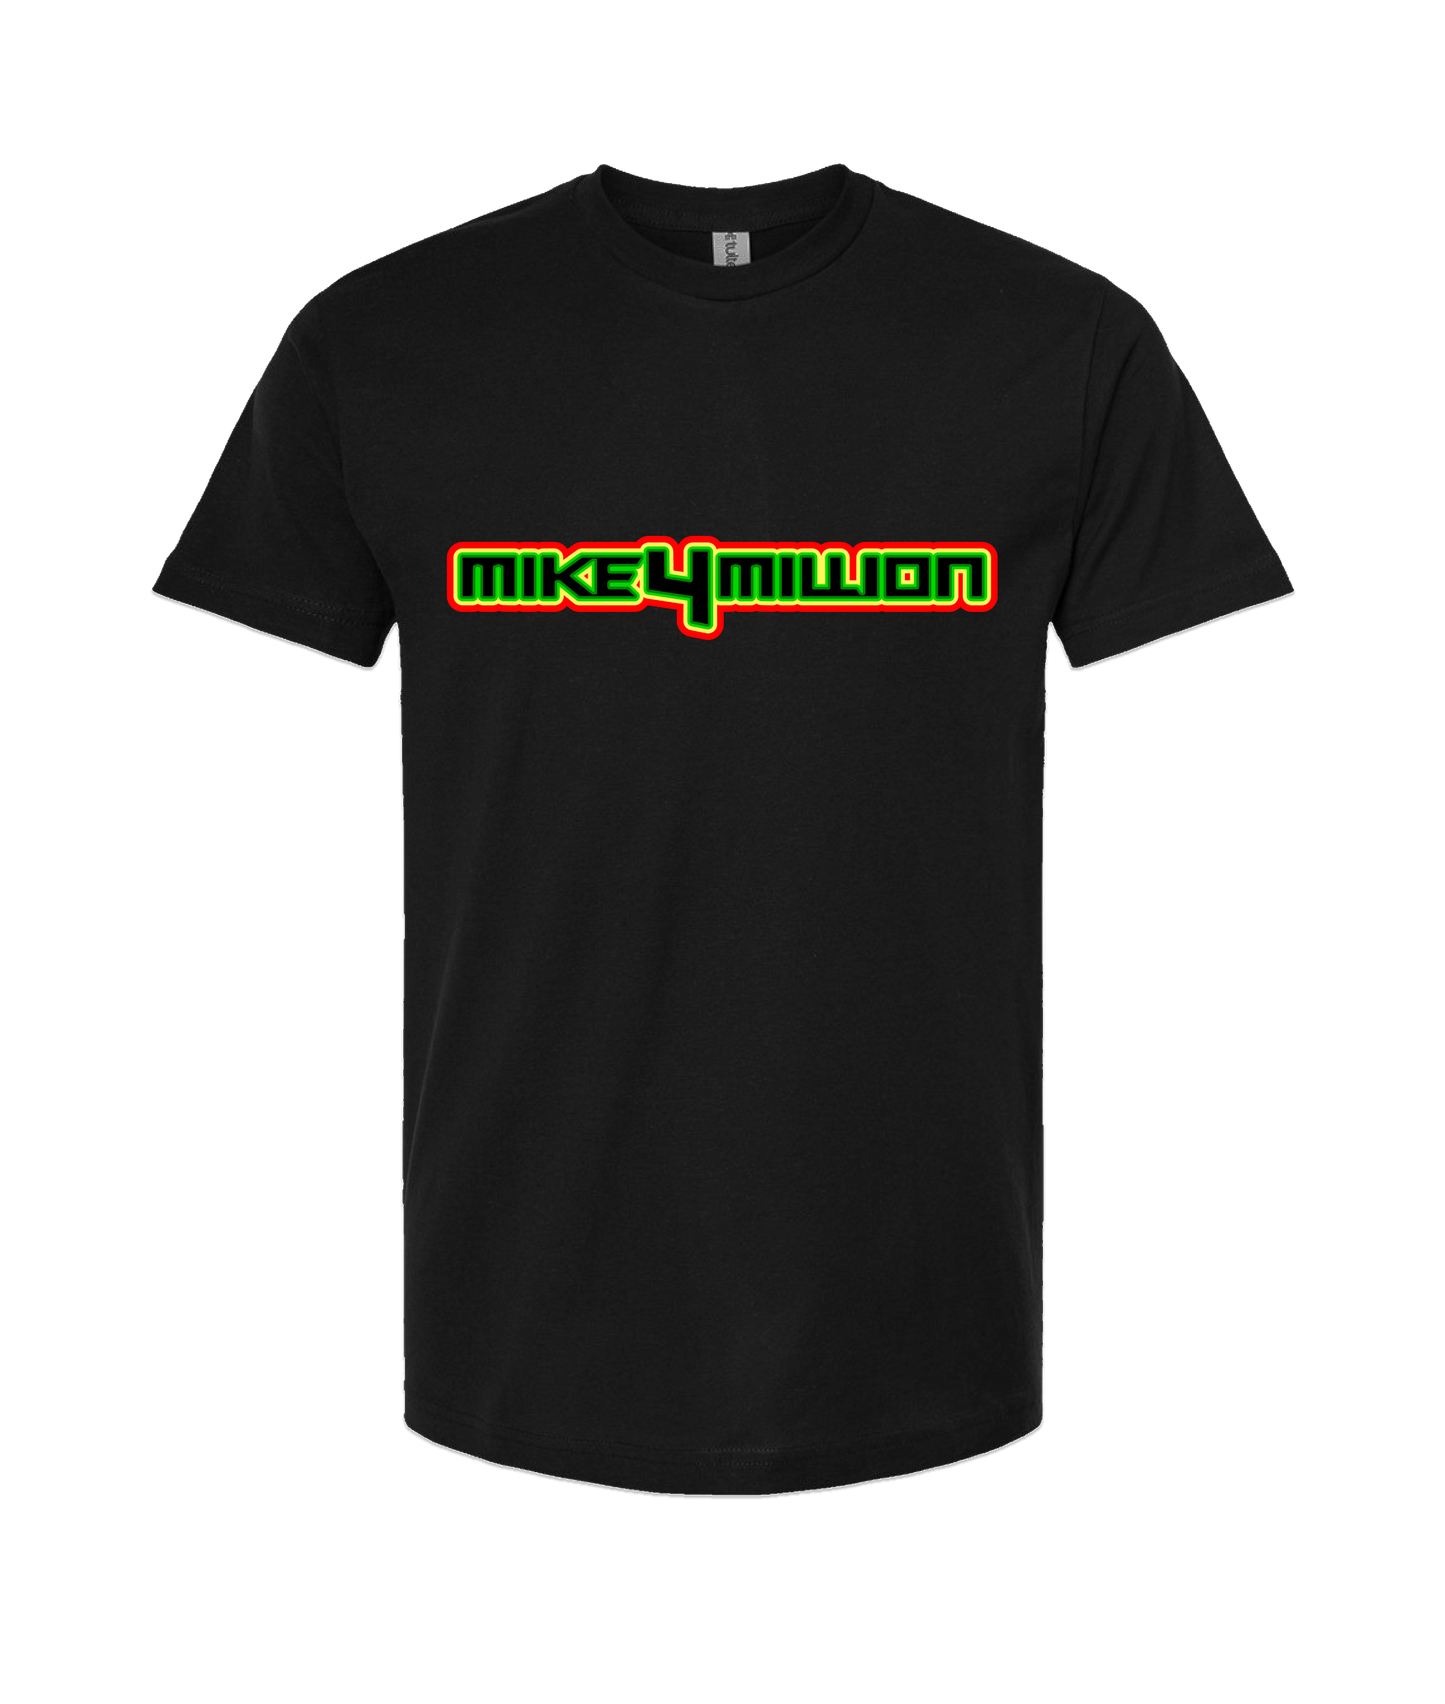 Mike4Million - DESIGN 1 - Black T-Shirt